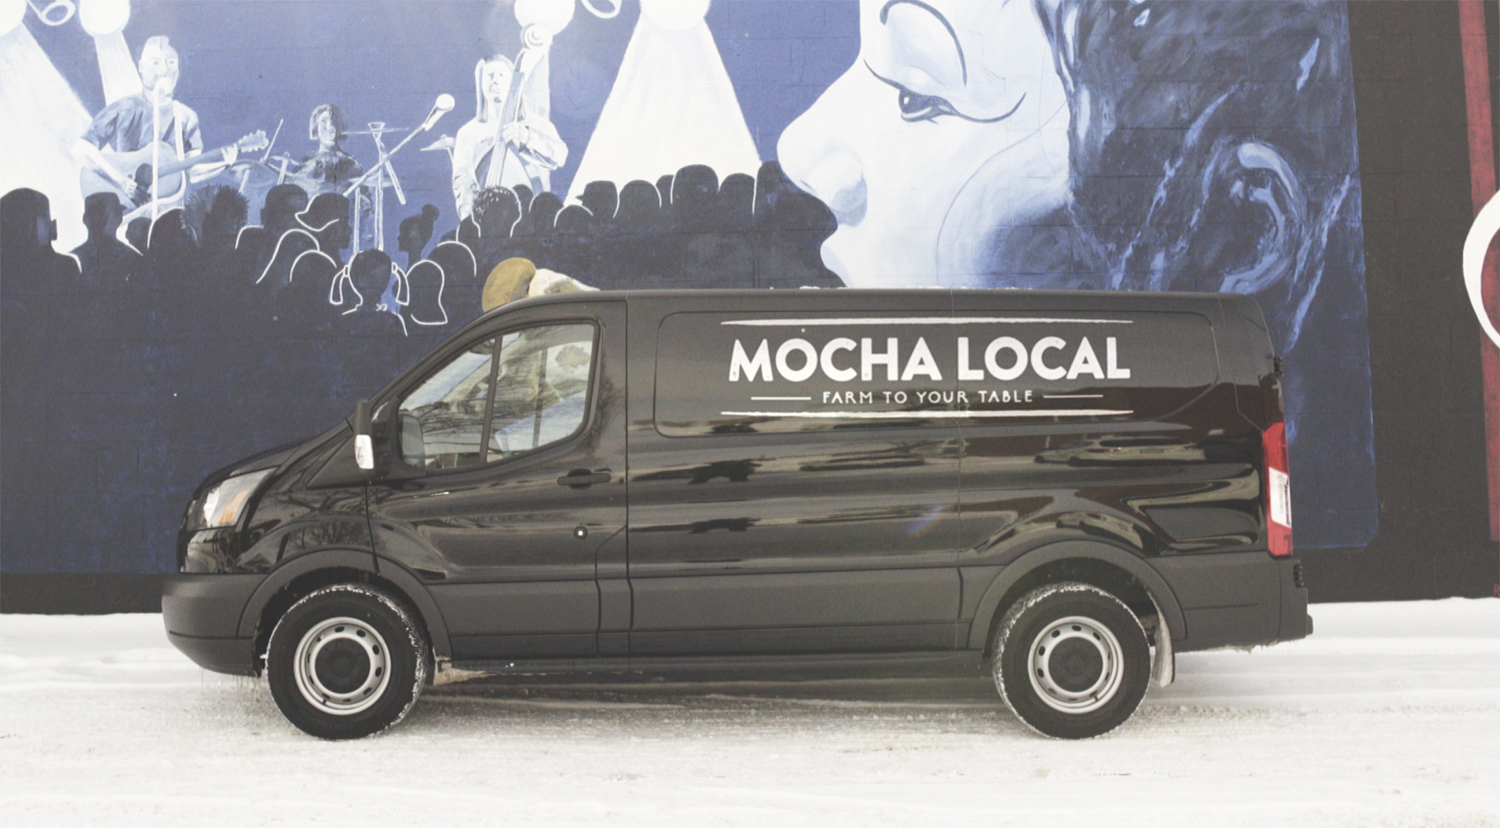 The Mocha Local Van